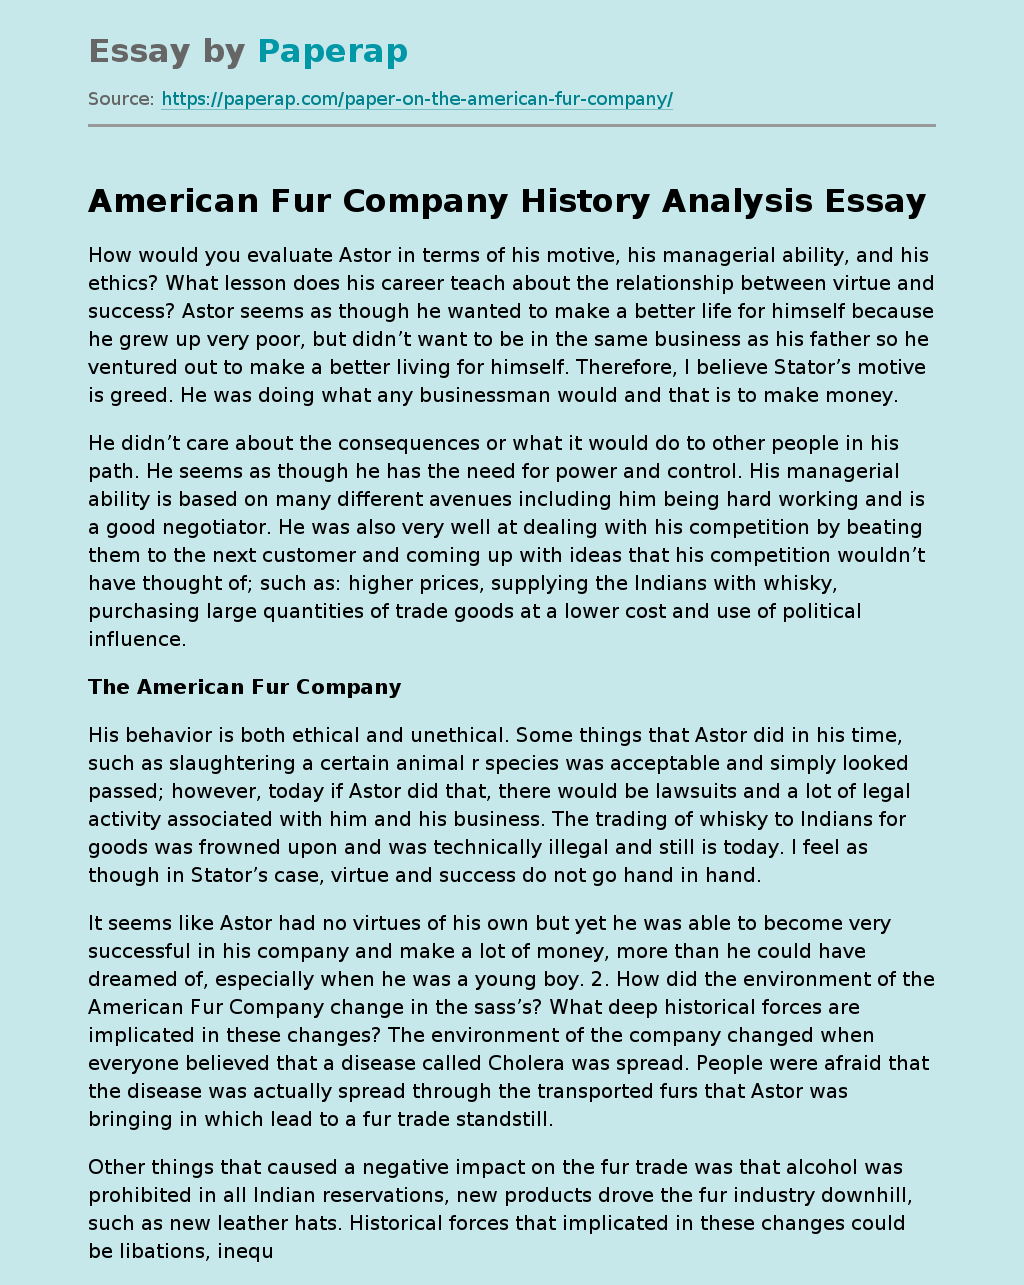 American Fur Company History Analysis